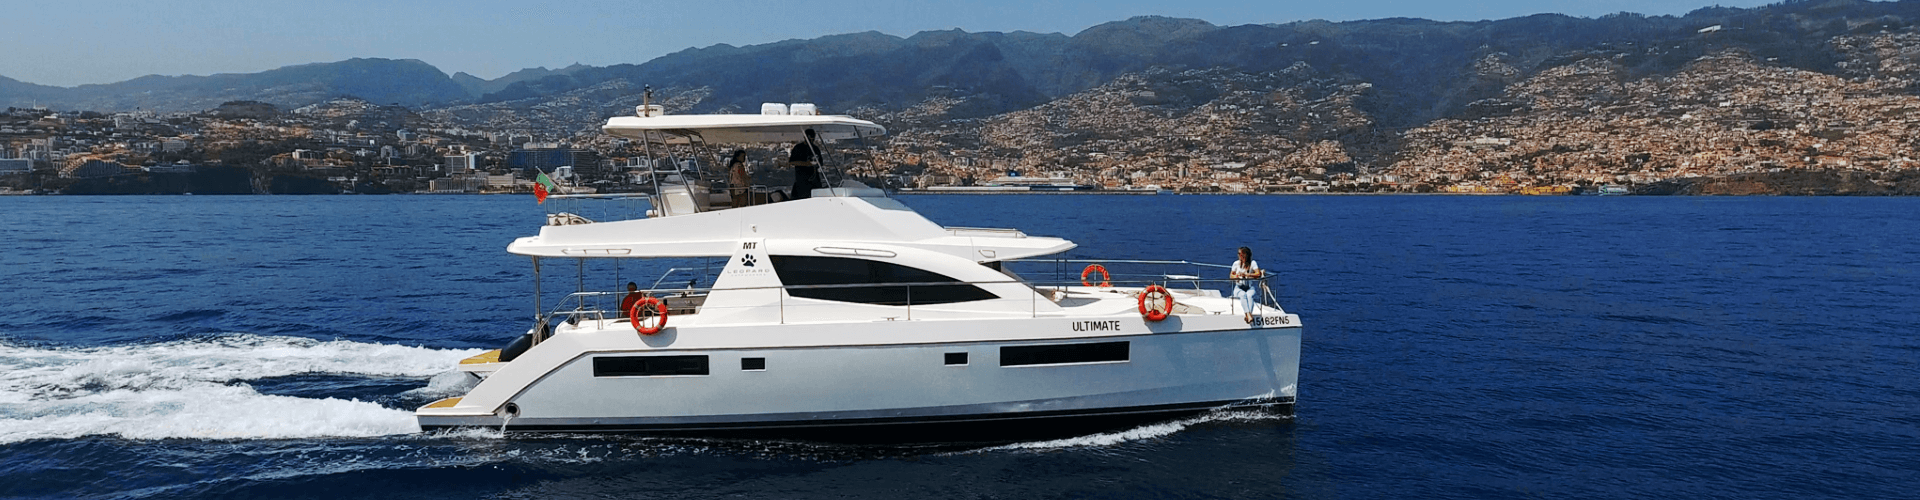 Funchal Full Day Private Catamaran Charter All Inclusive